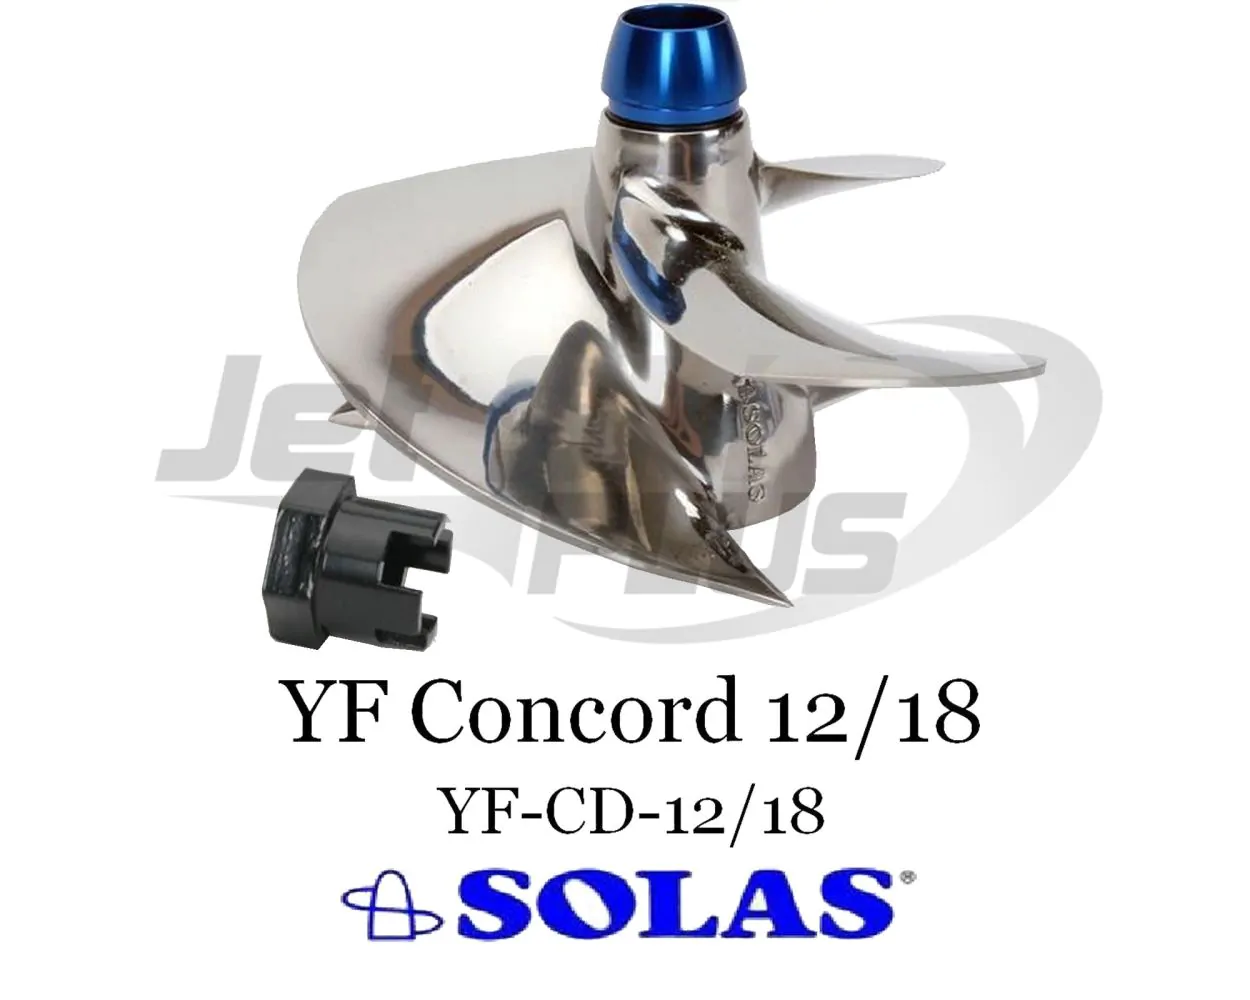 Solas Concord Yamaha XLT1200 XL XLT 1200 1999-2005 FX 140 AR230 12-18 Pitch